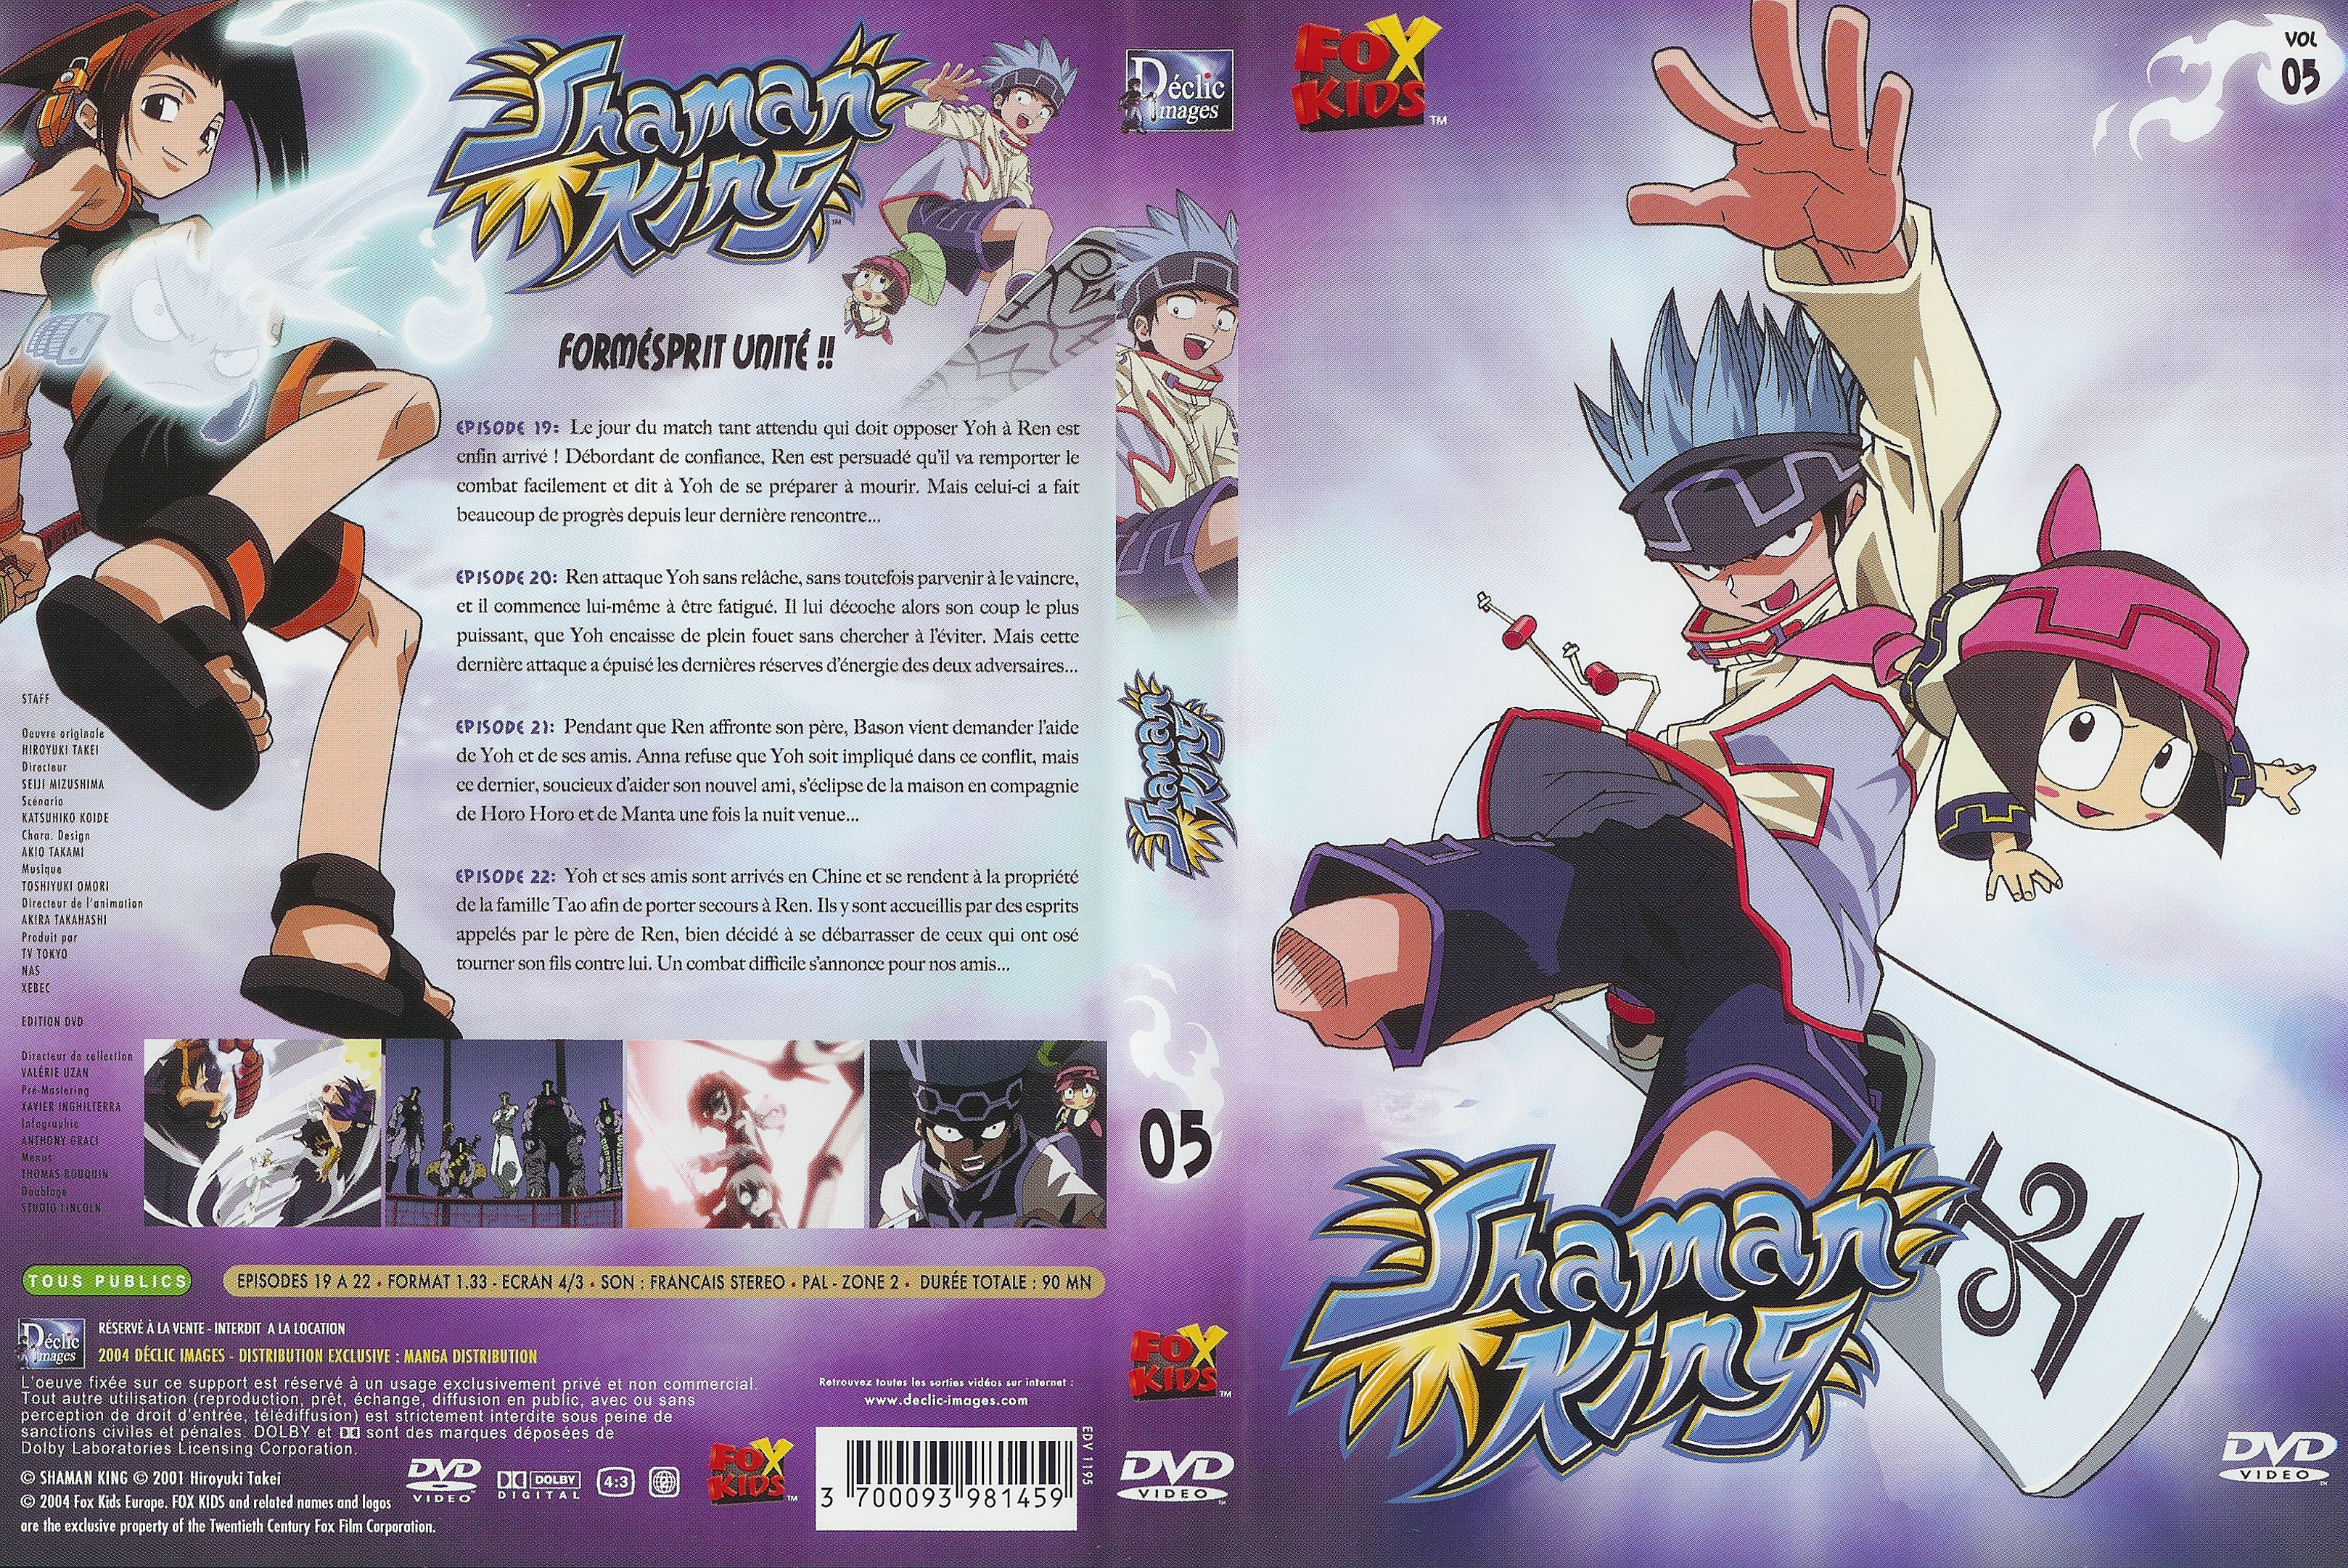 Jaquette DVD Shaman king vol 05